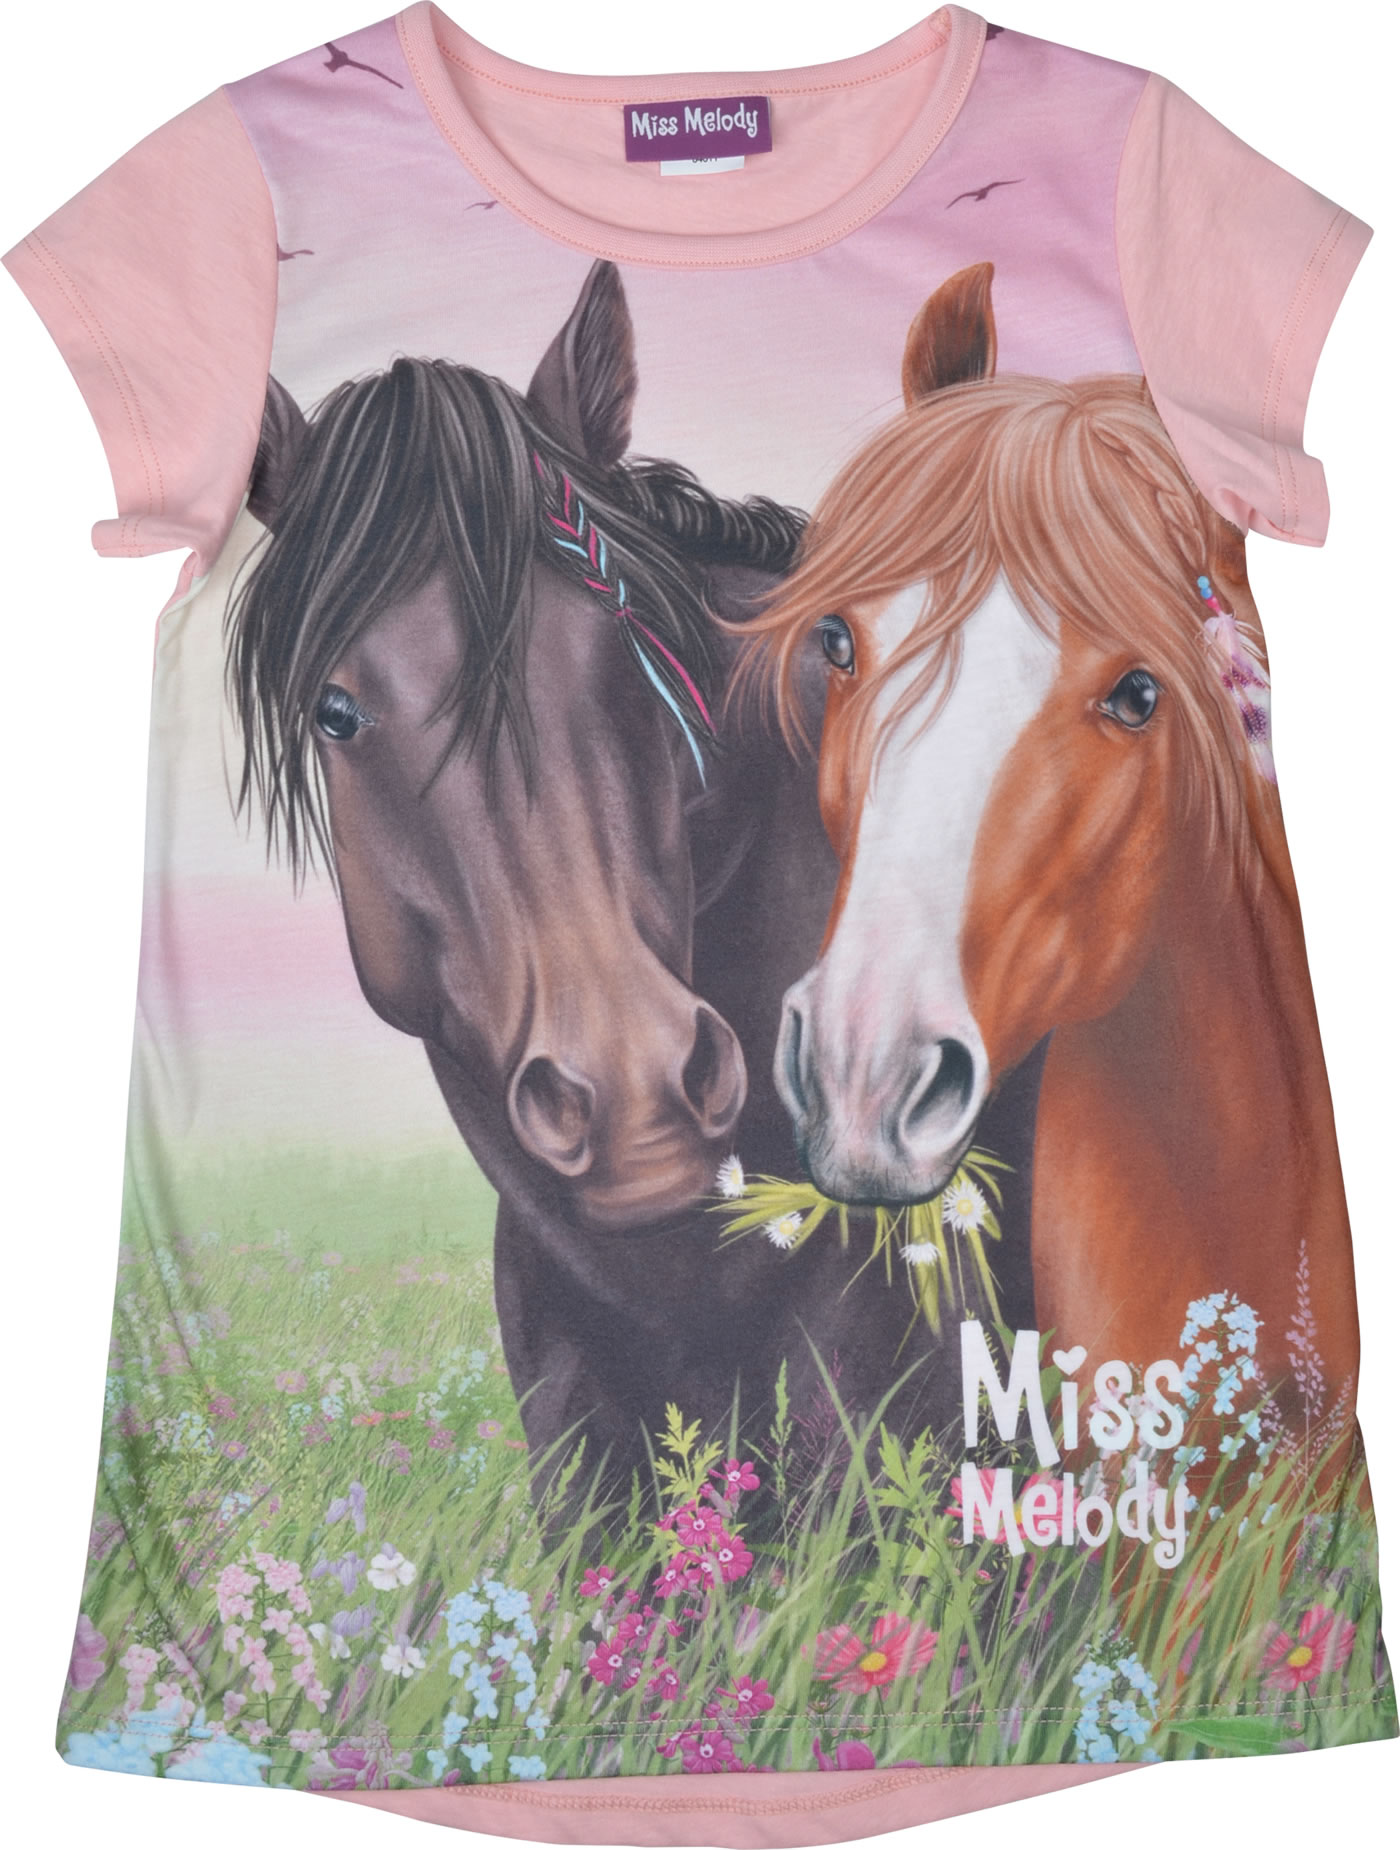 Melody T-Shirt pink Kurzarm ZWEI Miss PFERDE candy kaufen